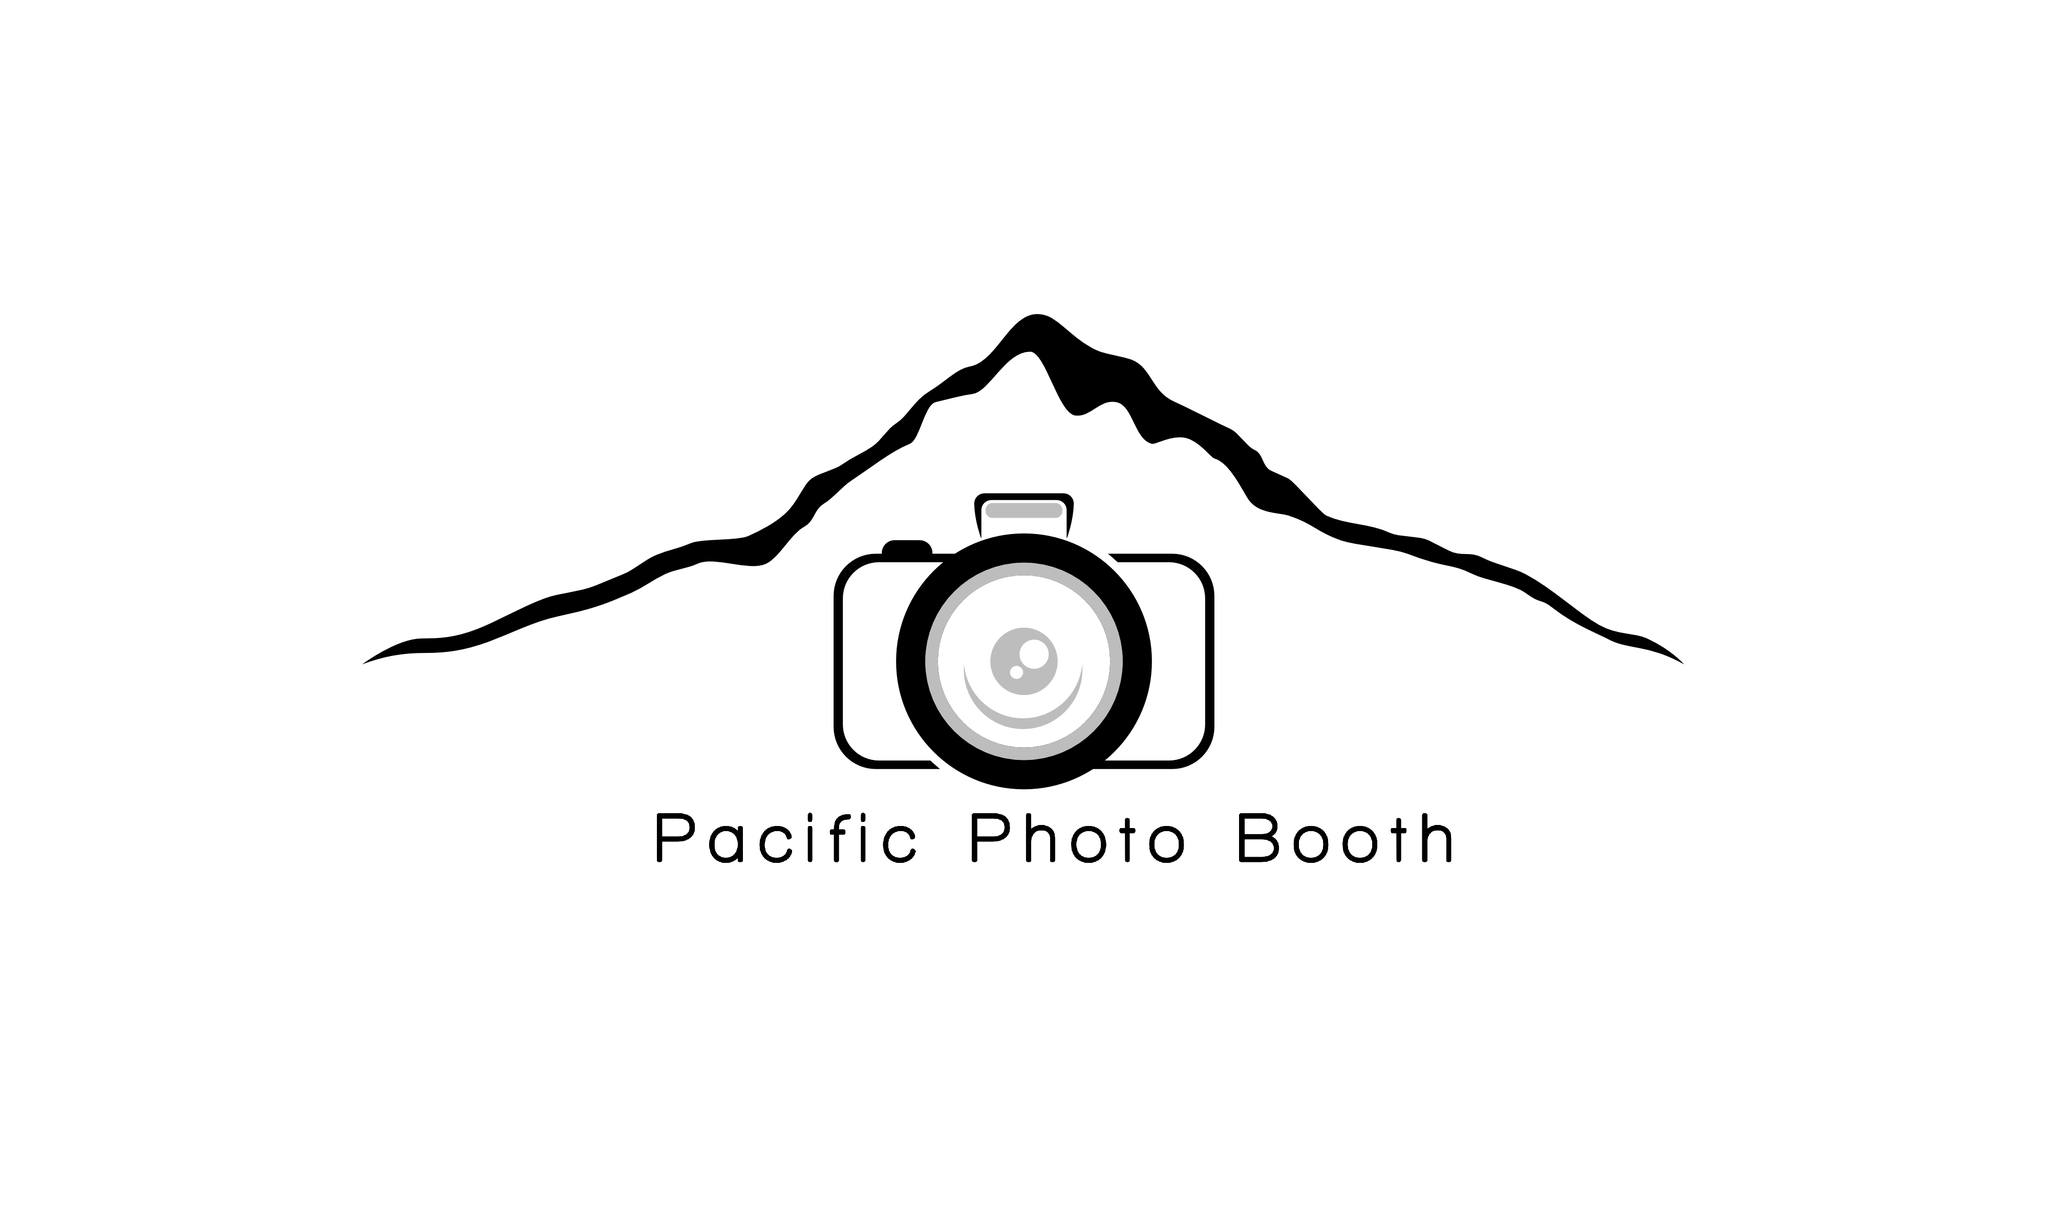 Pacific-Photo-Booth-logo.jpg